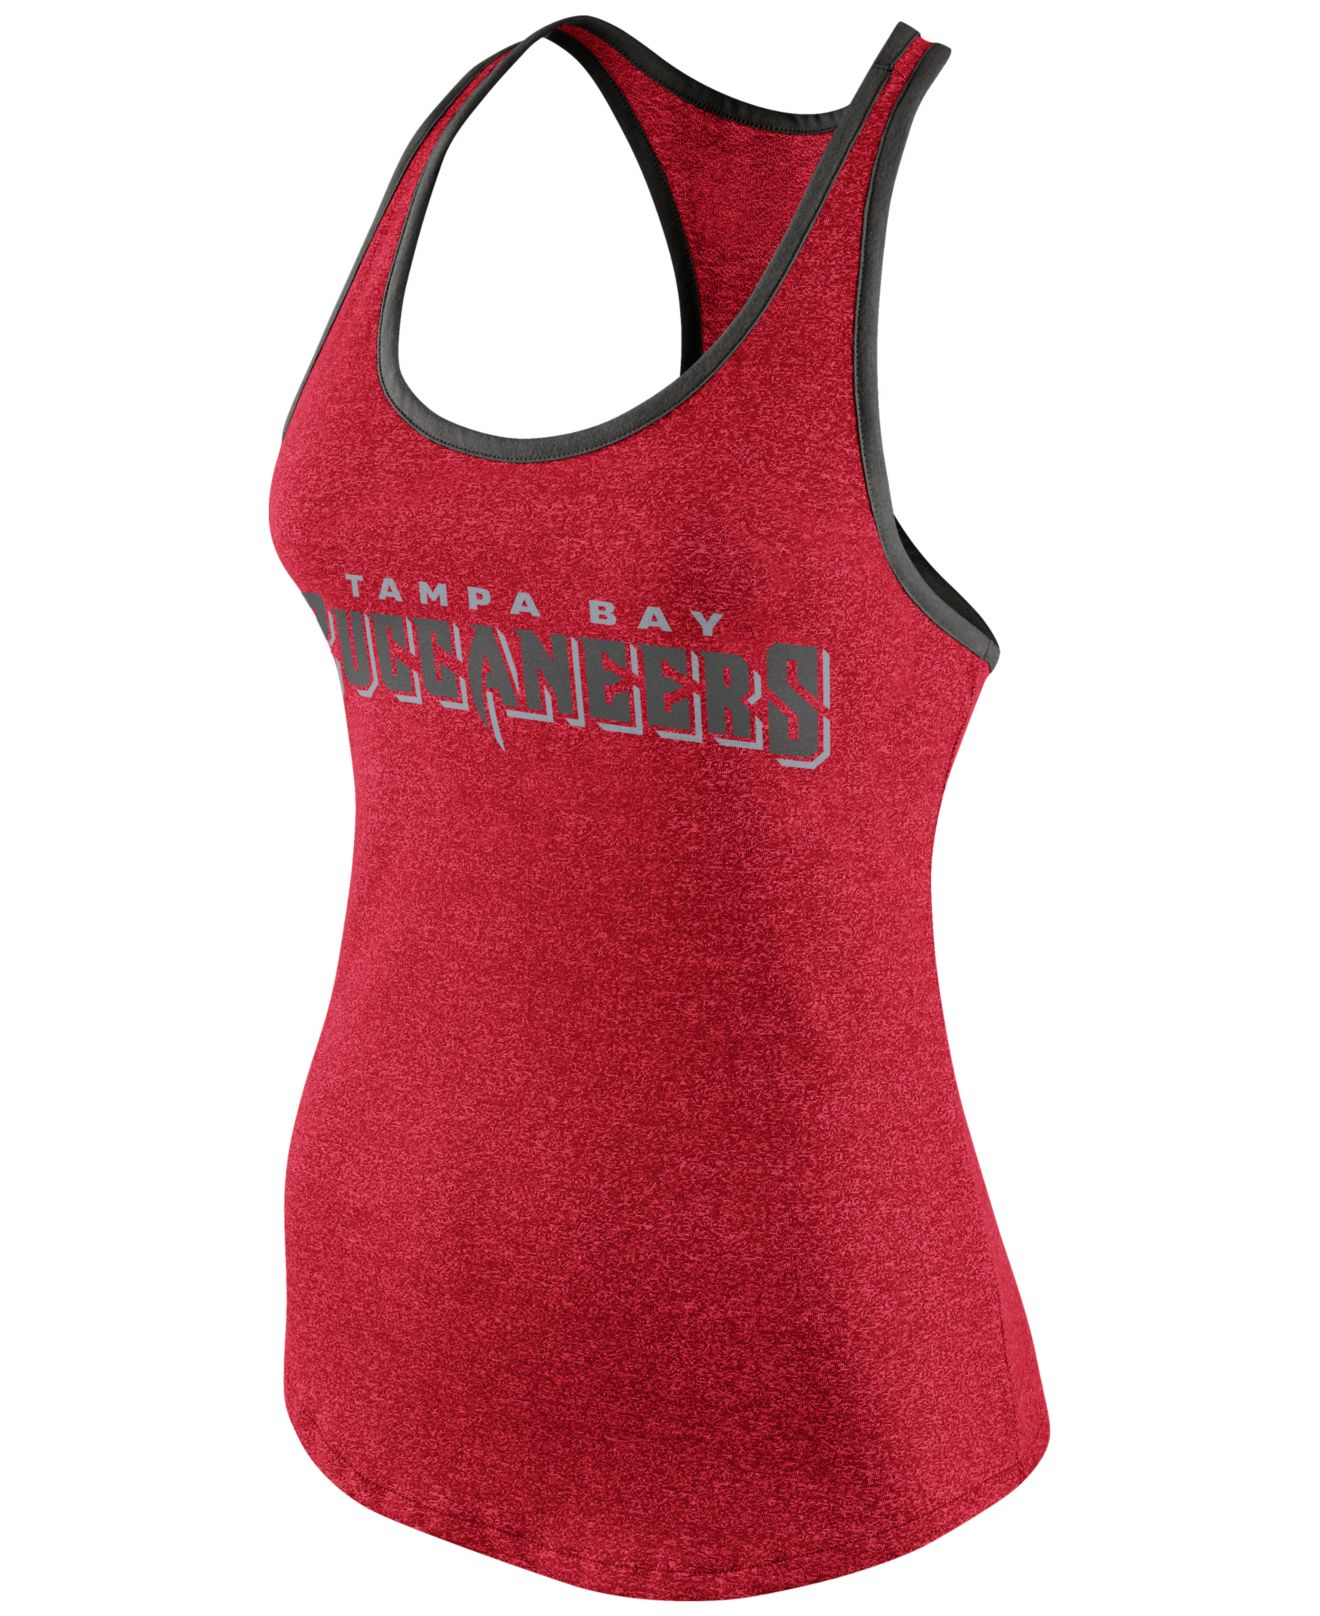 Lyst - Nike Women's Tampa Bay Buccaneers Fan Marled Tank Top in Red